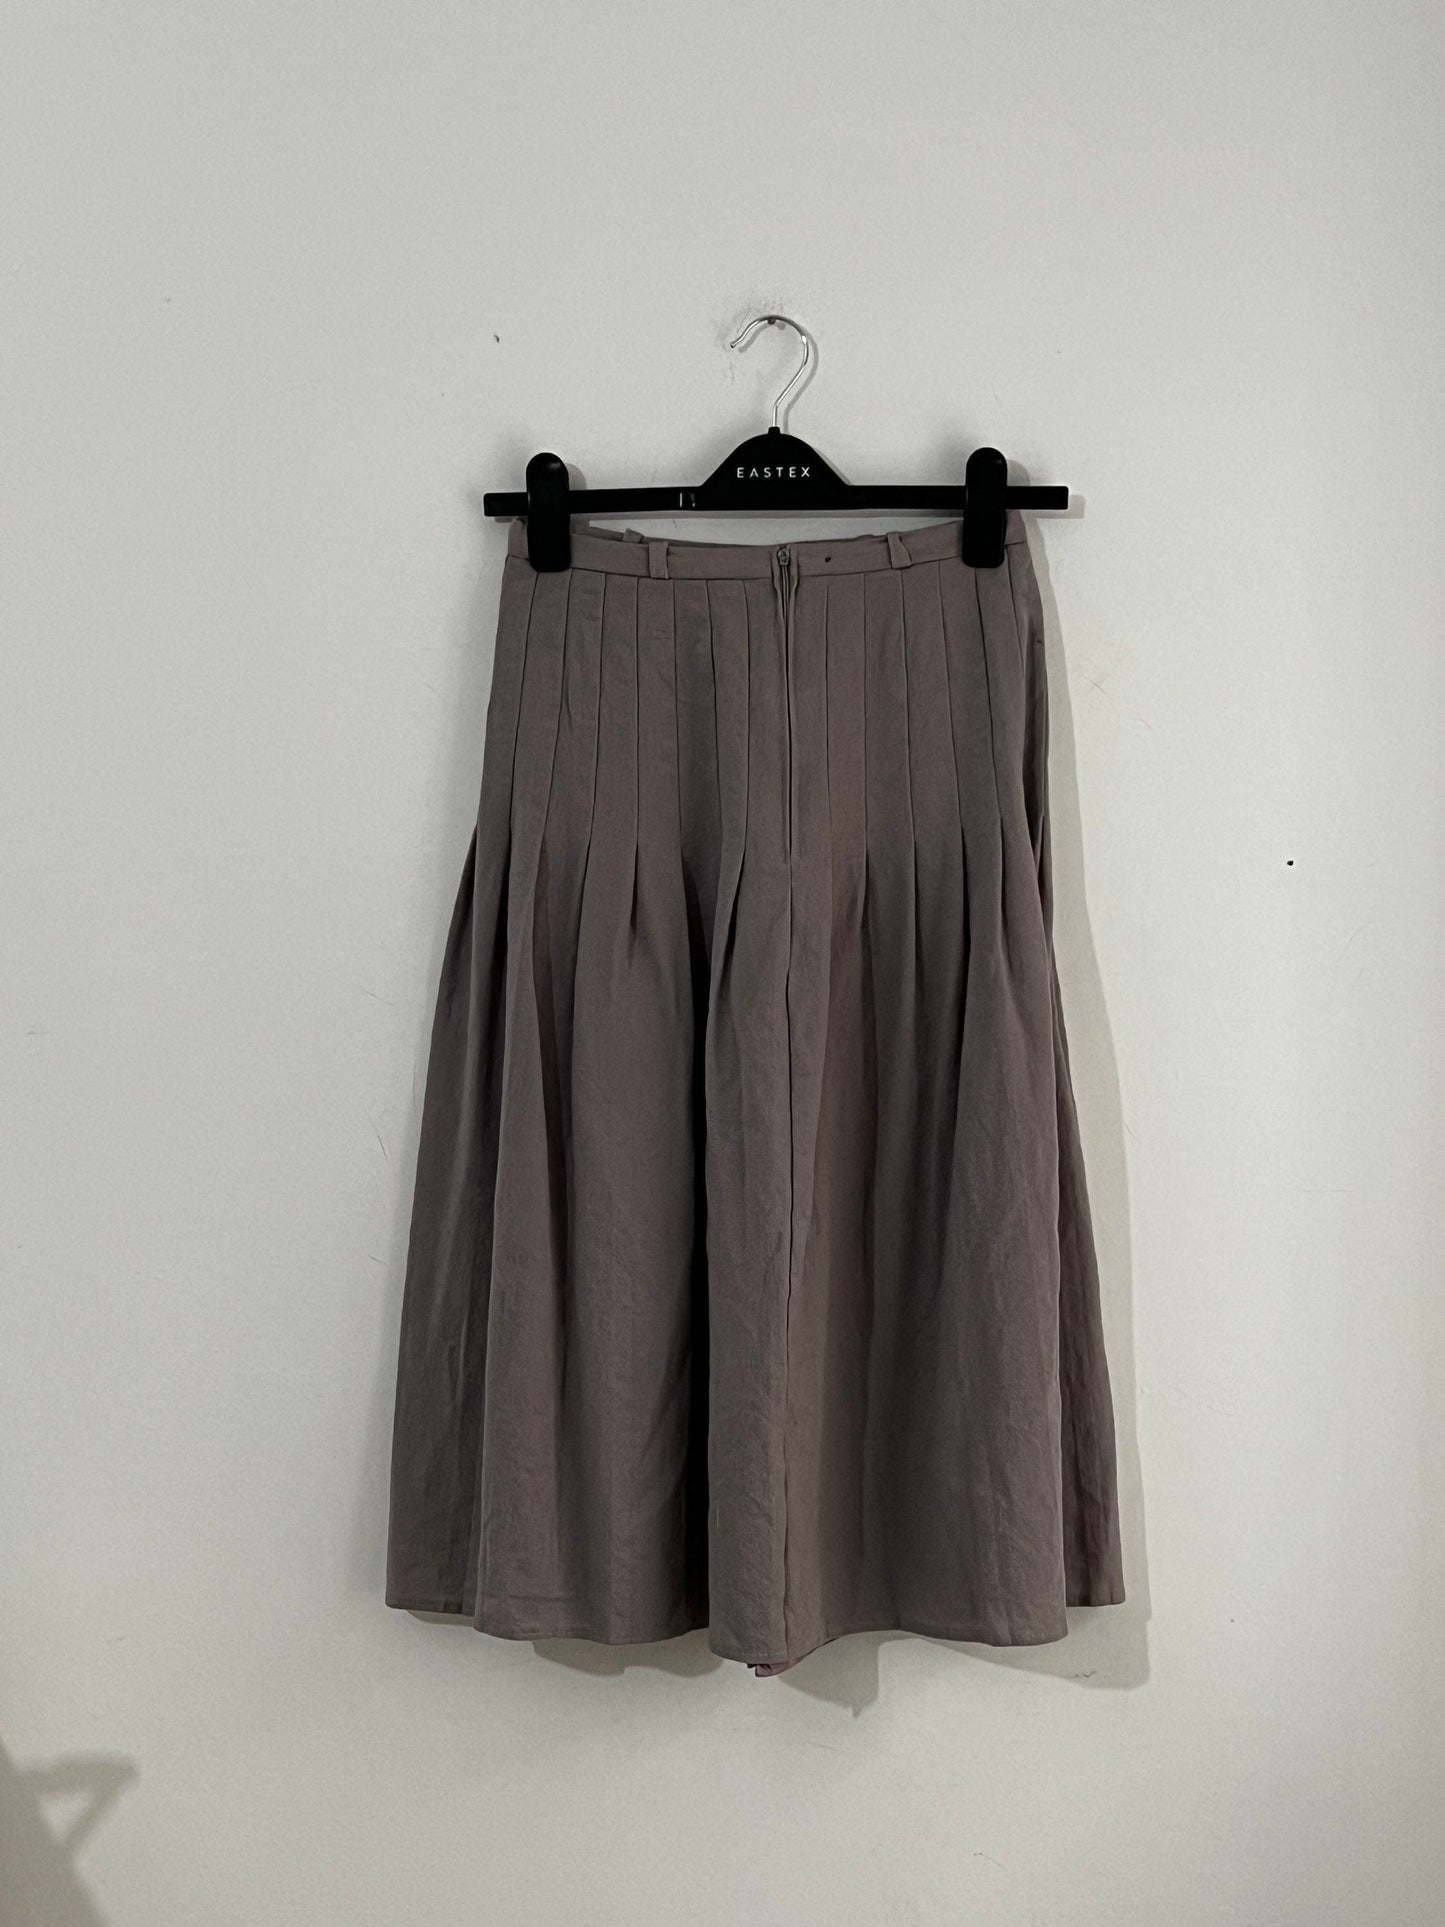 Purple grey Pleat midi skirt wool. Pale mauve purple grey soft pleats at the top UK 6 Active Restock requests: 0